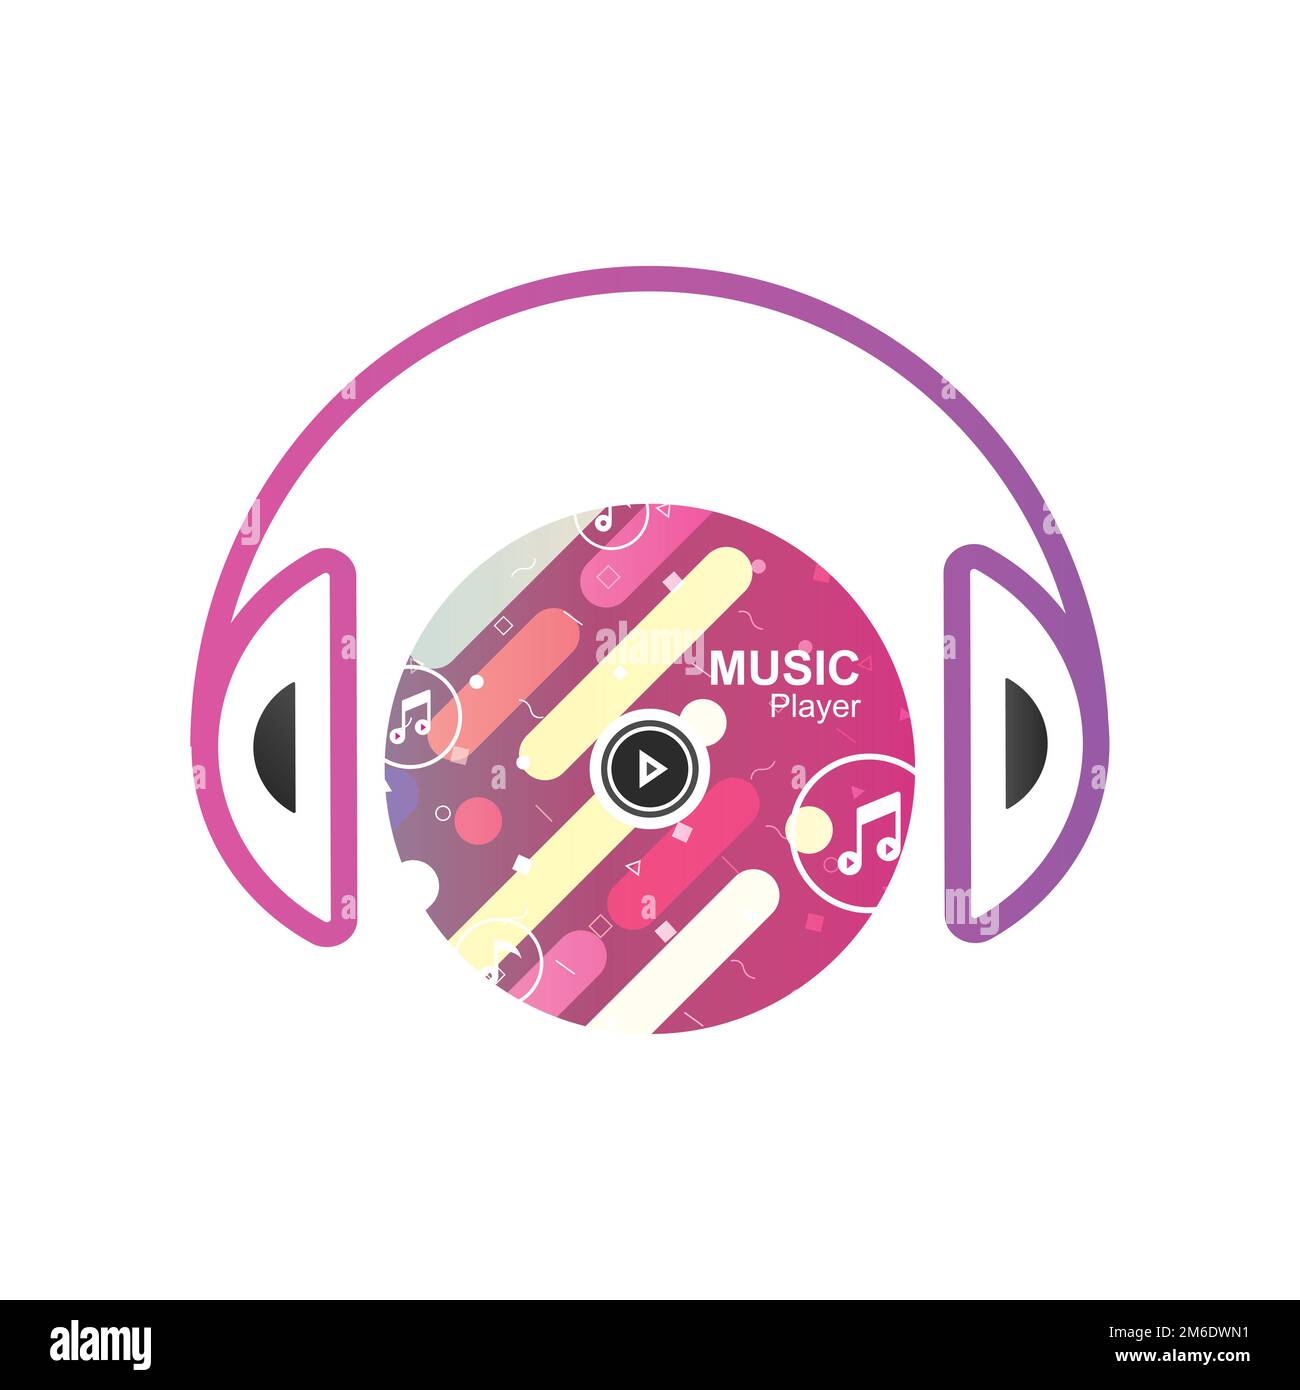 CD Music player concept vector Stock Photo